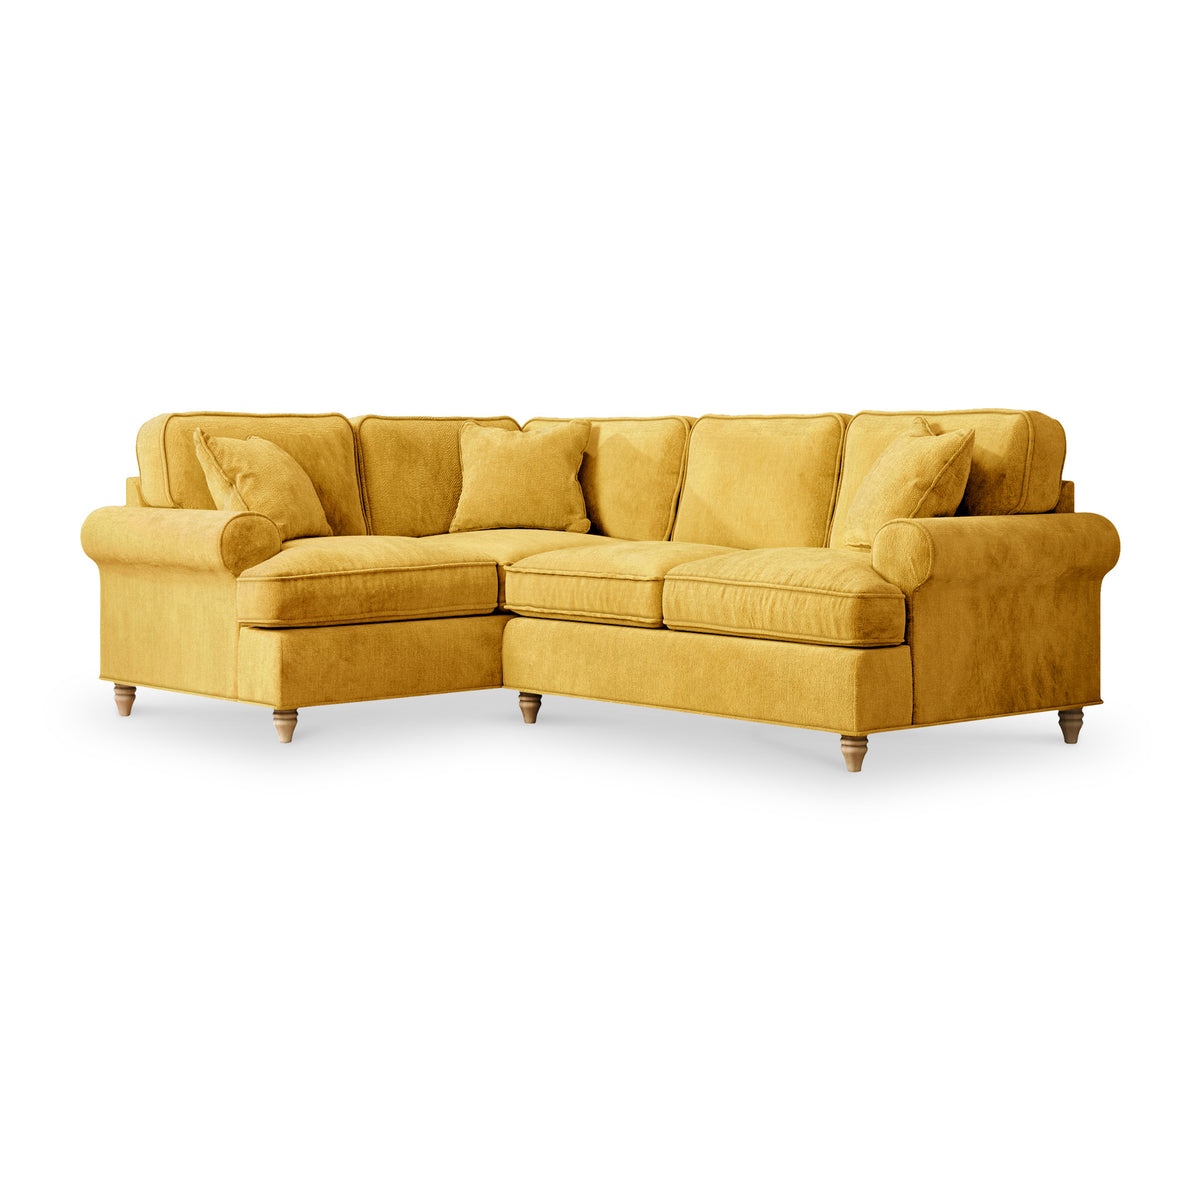 Alfie Gold Corner Sofa from Roseland Furniture